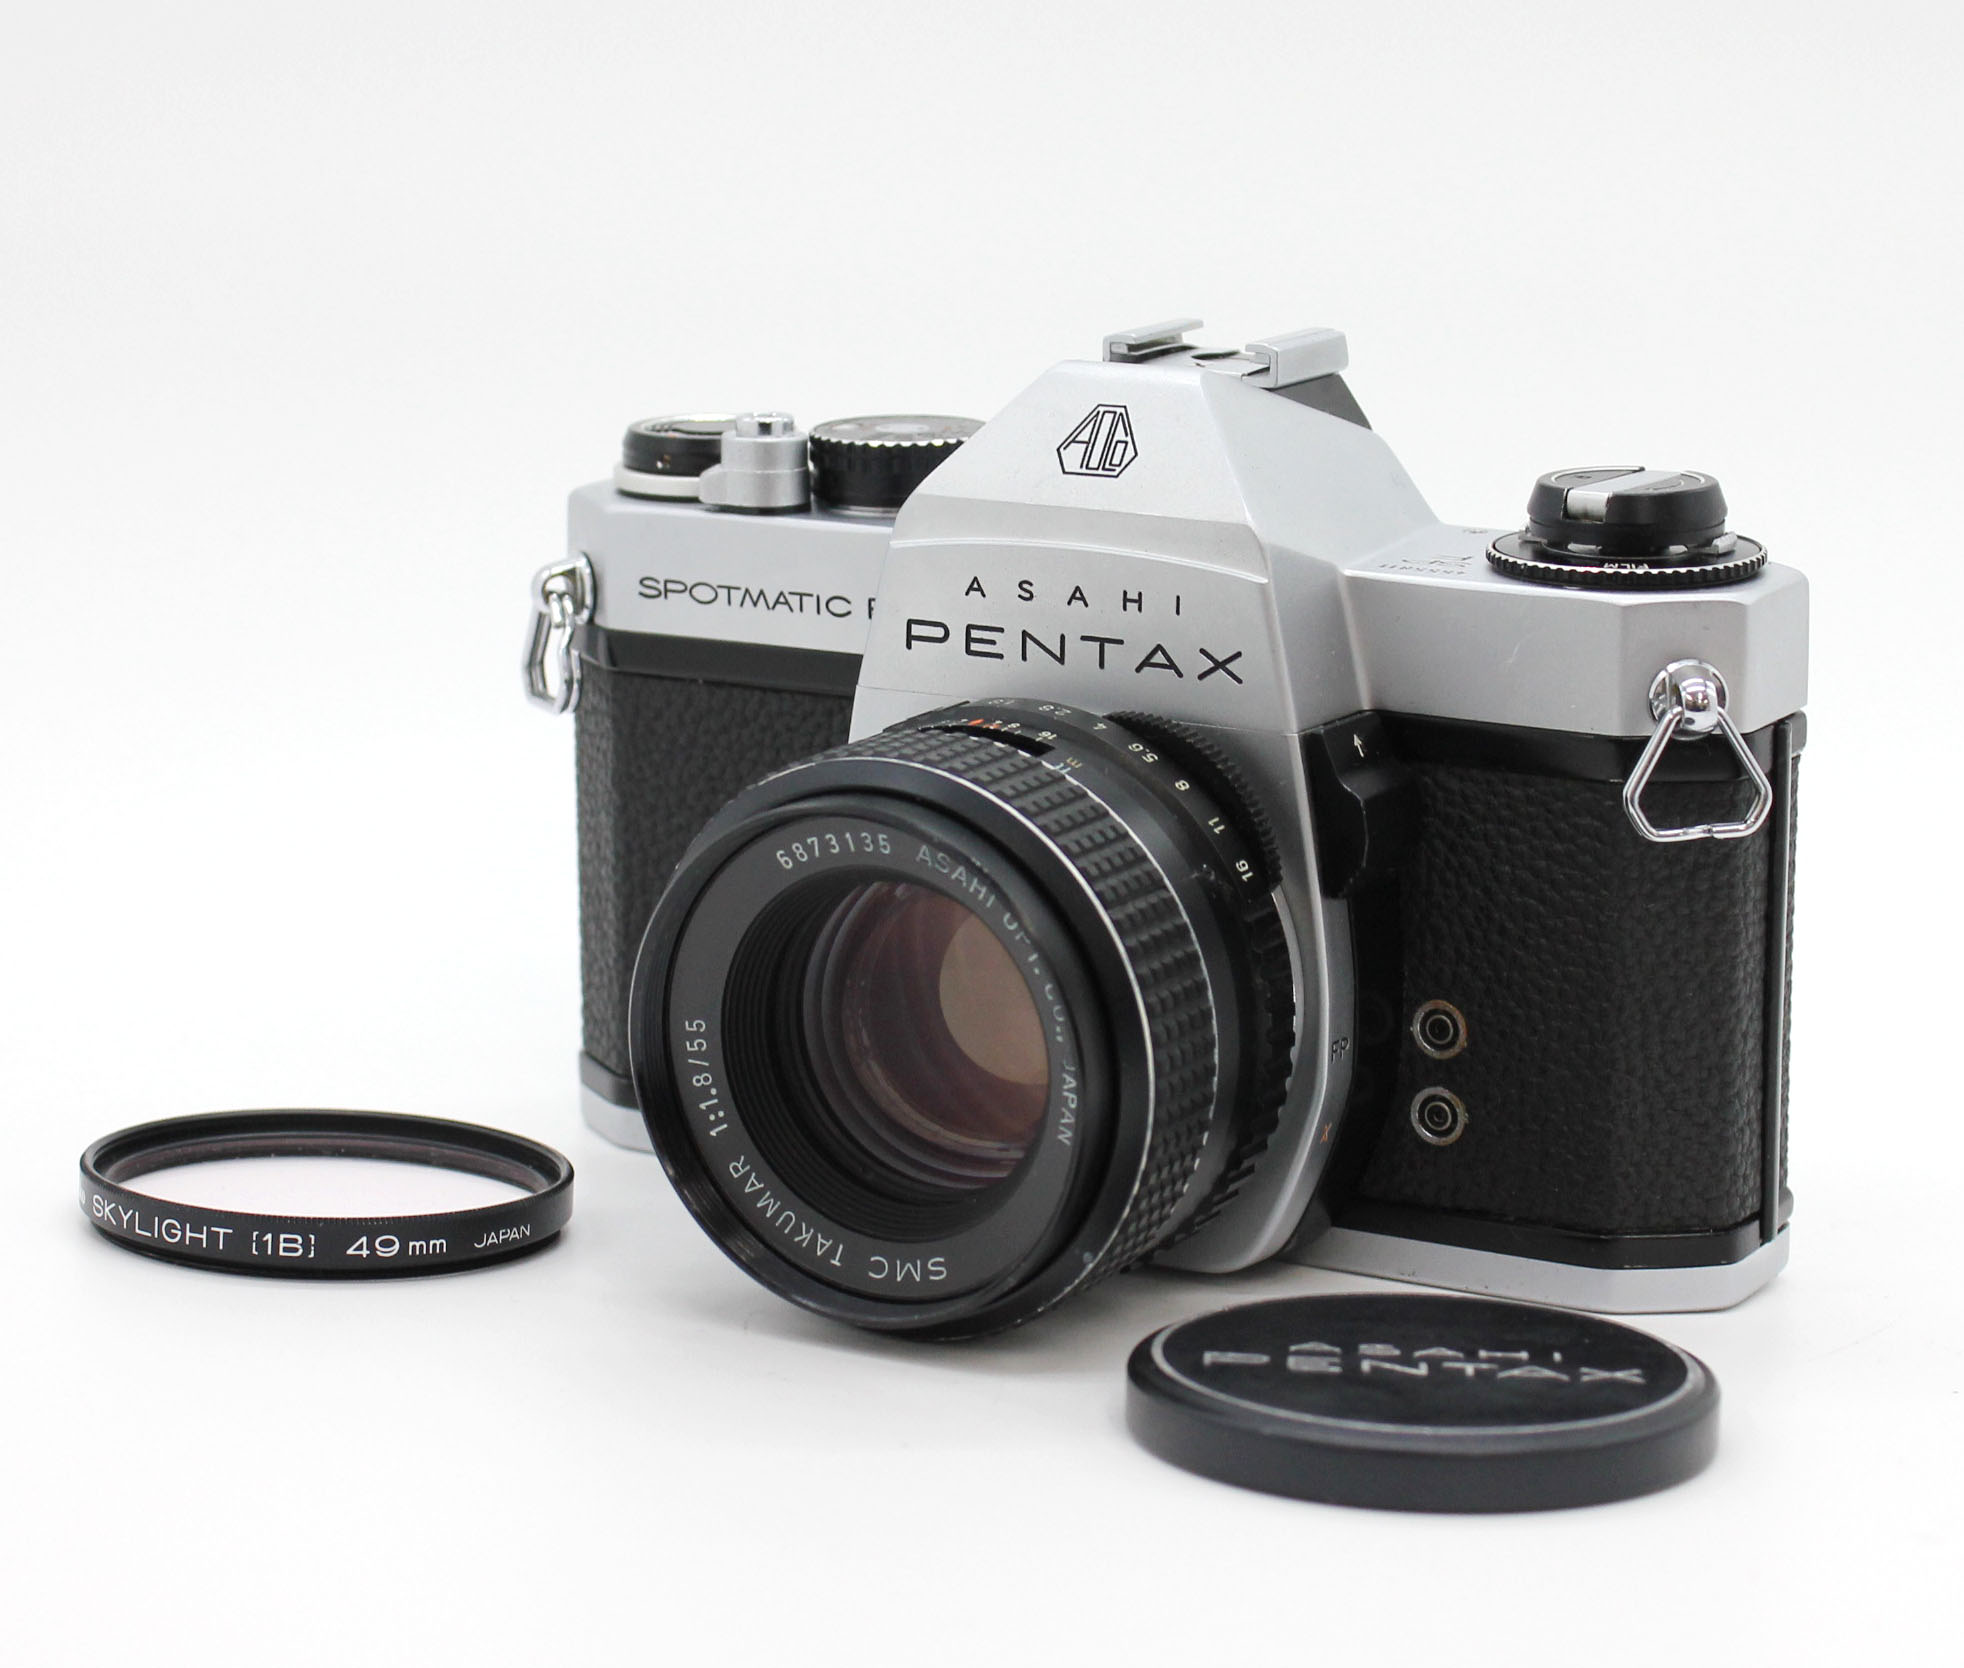 Japan Used Camera Shop | Asahi Pentax Spotmatic F SPF 35mm SLR Camera w/ SMC Takumar 55mm F/1.8 Lens from Japan